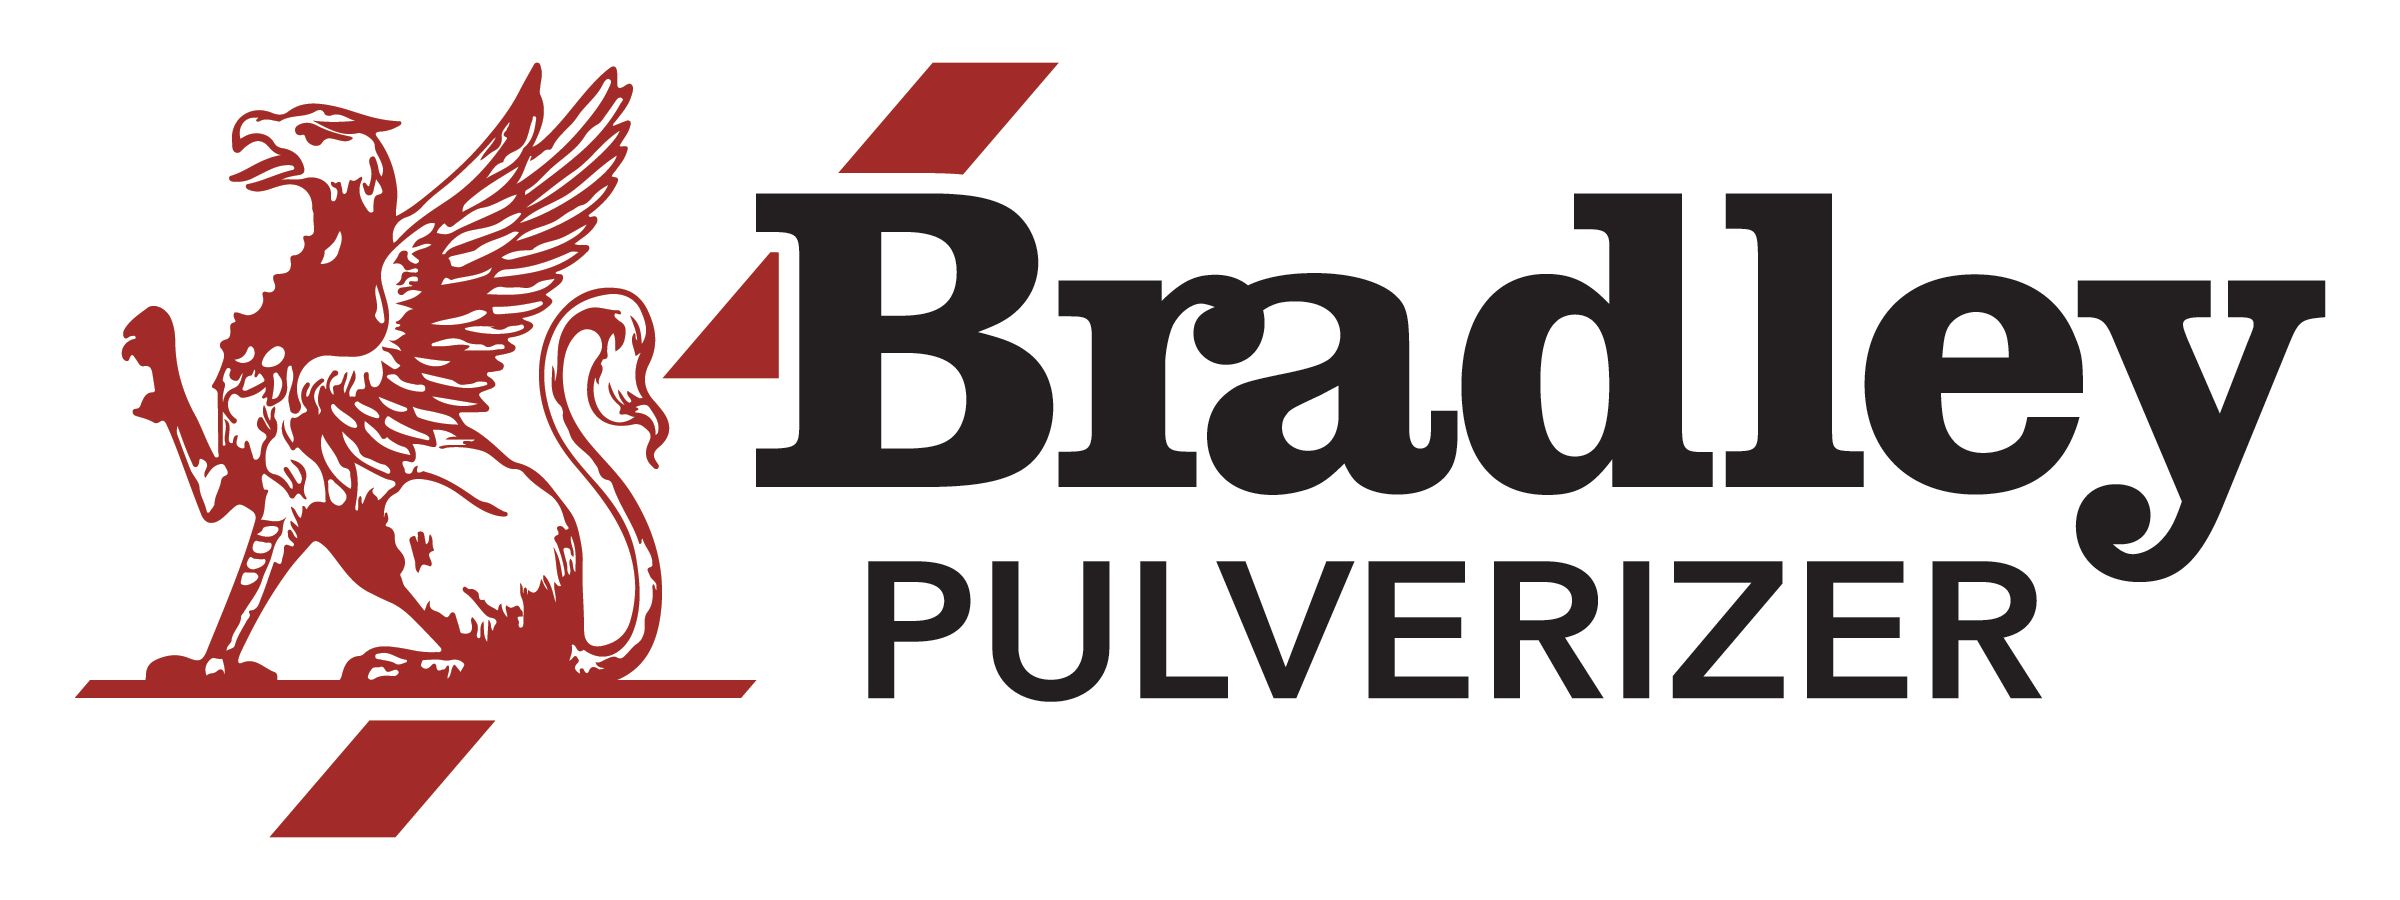 Bradley Pulverizer Company Ltd